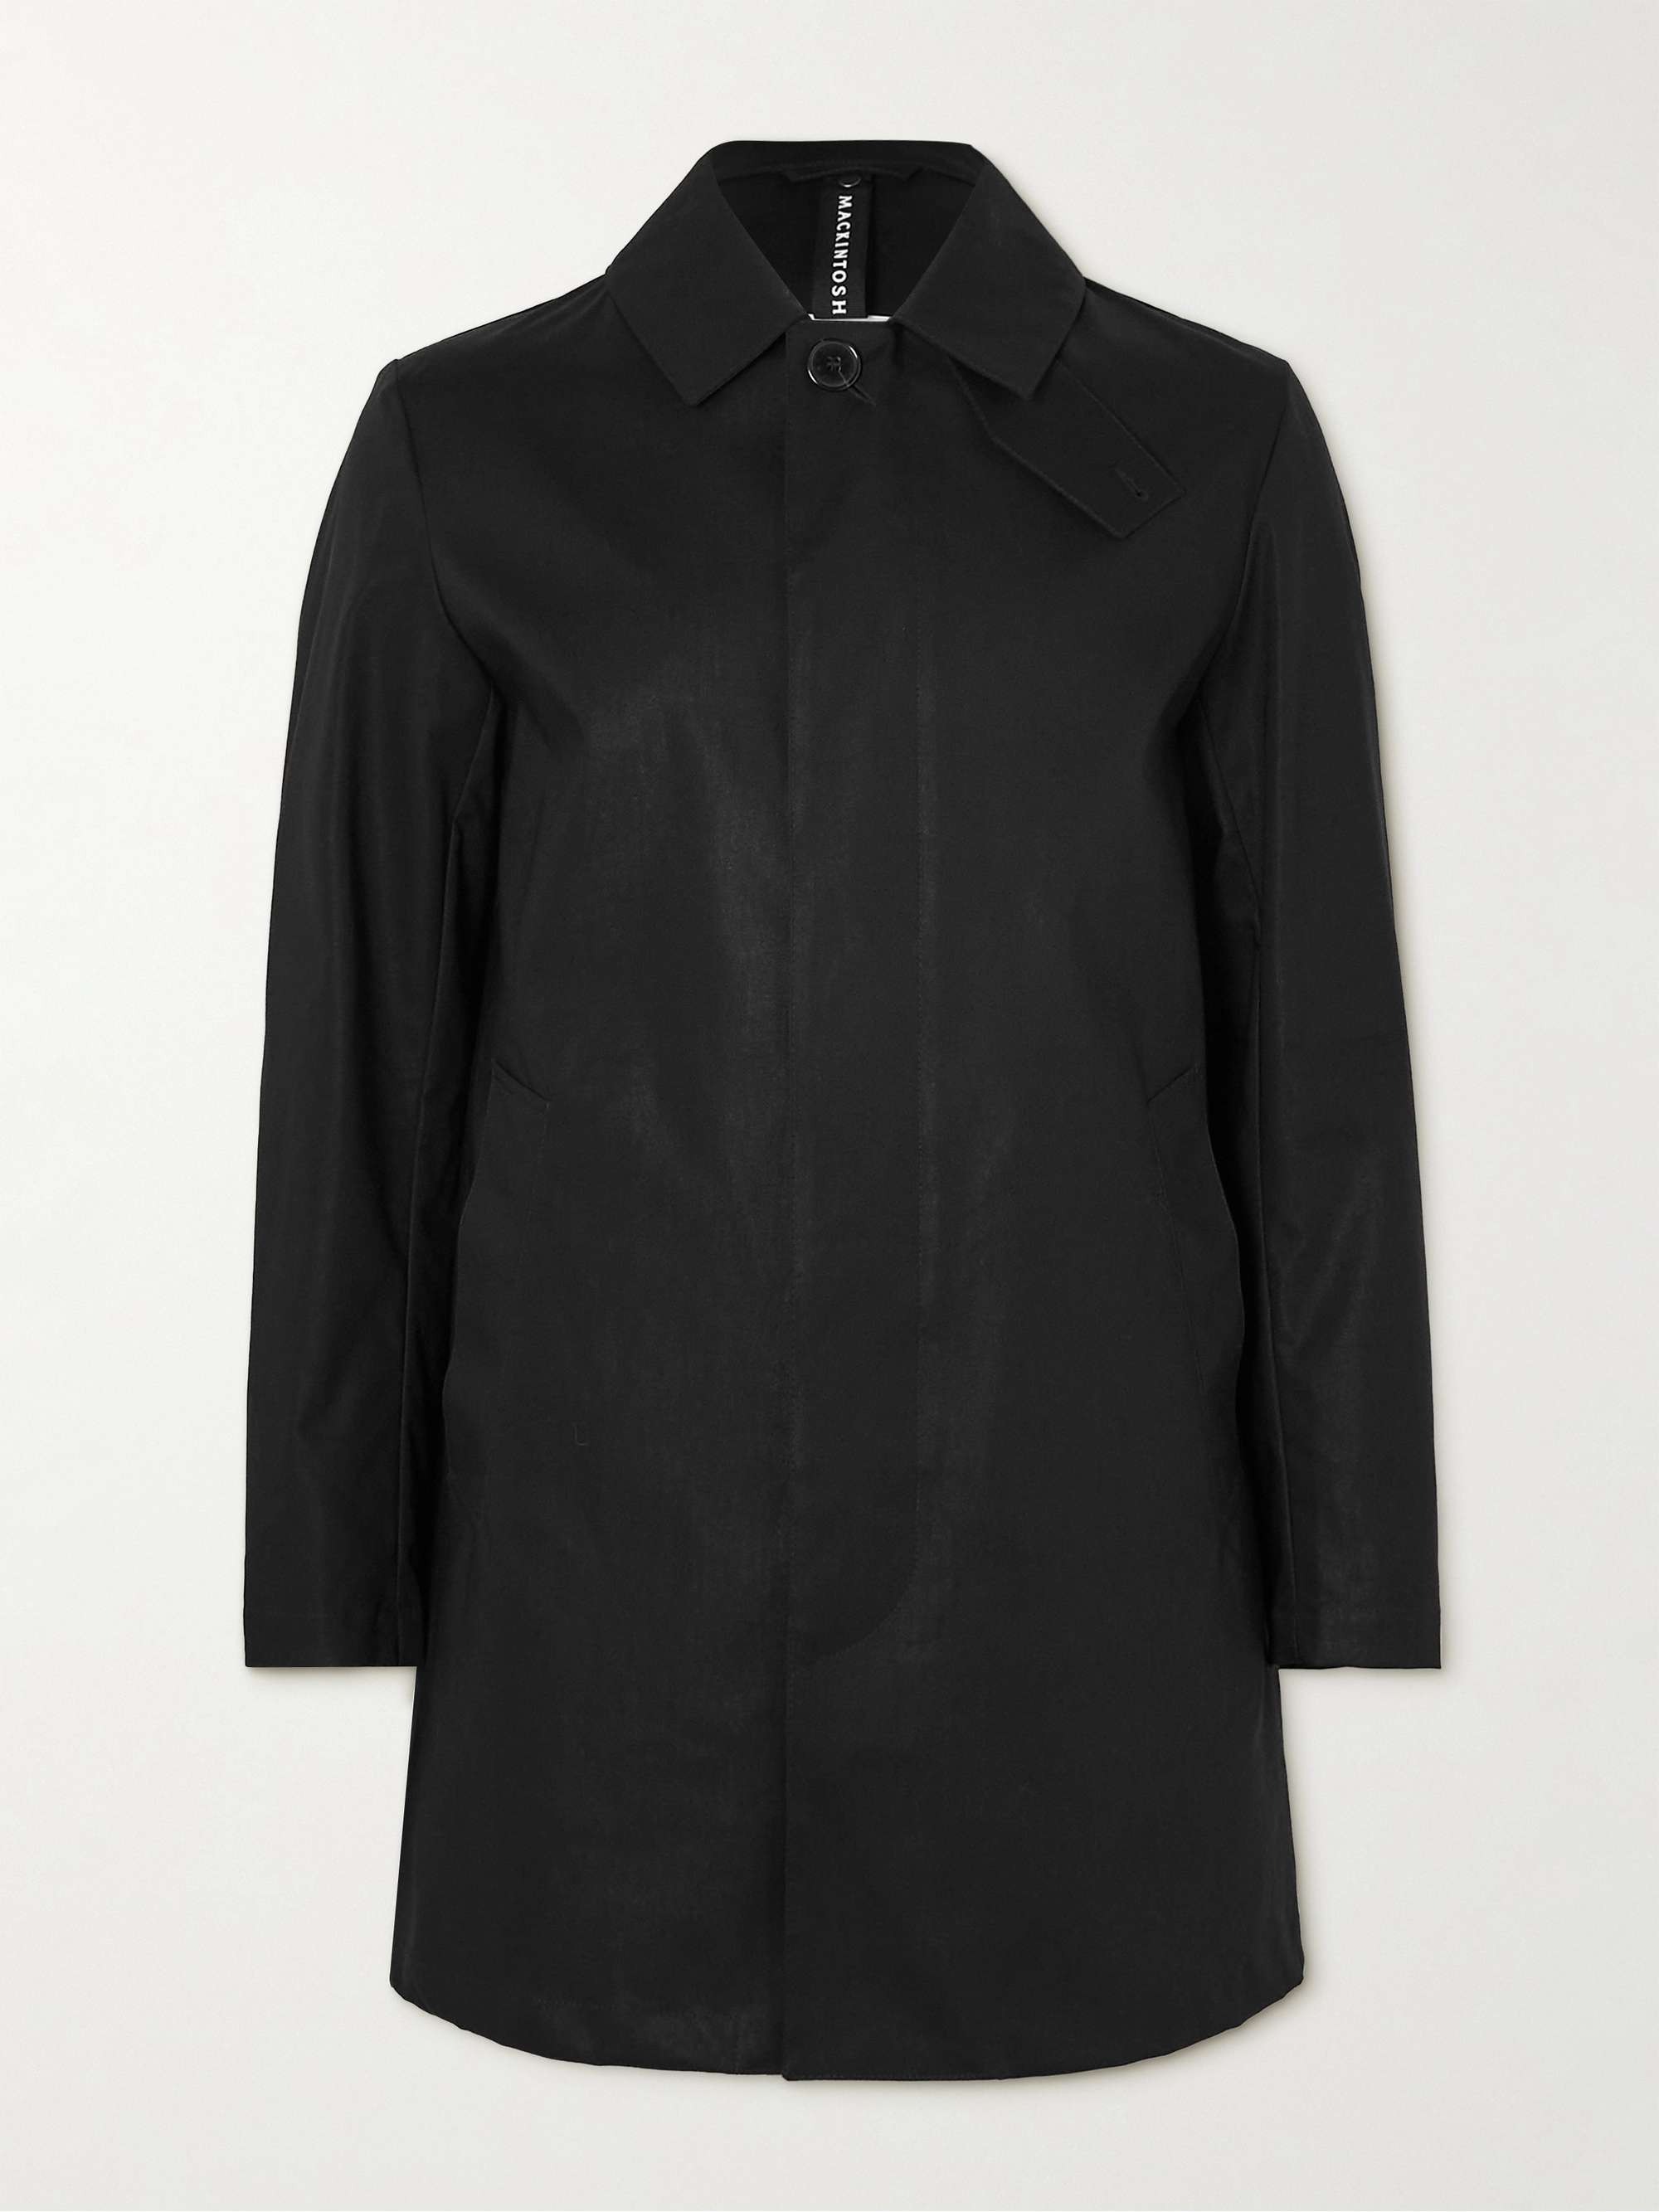 MACKINTOSH Cambridge Bonded Cotton Hooded Trench Coat for Men | MR PORTER